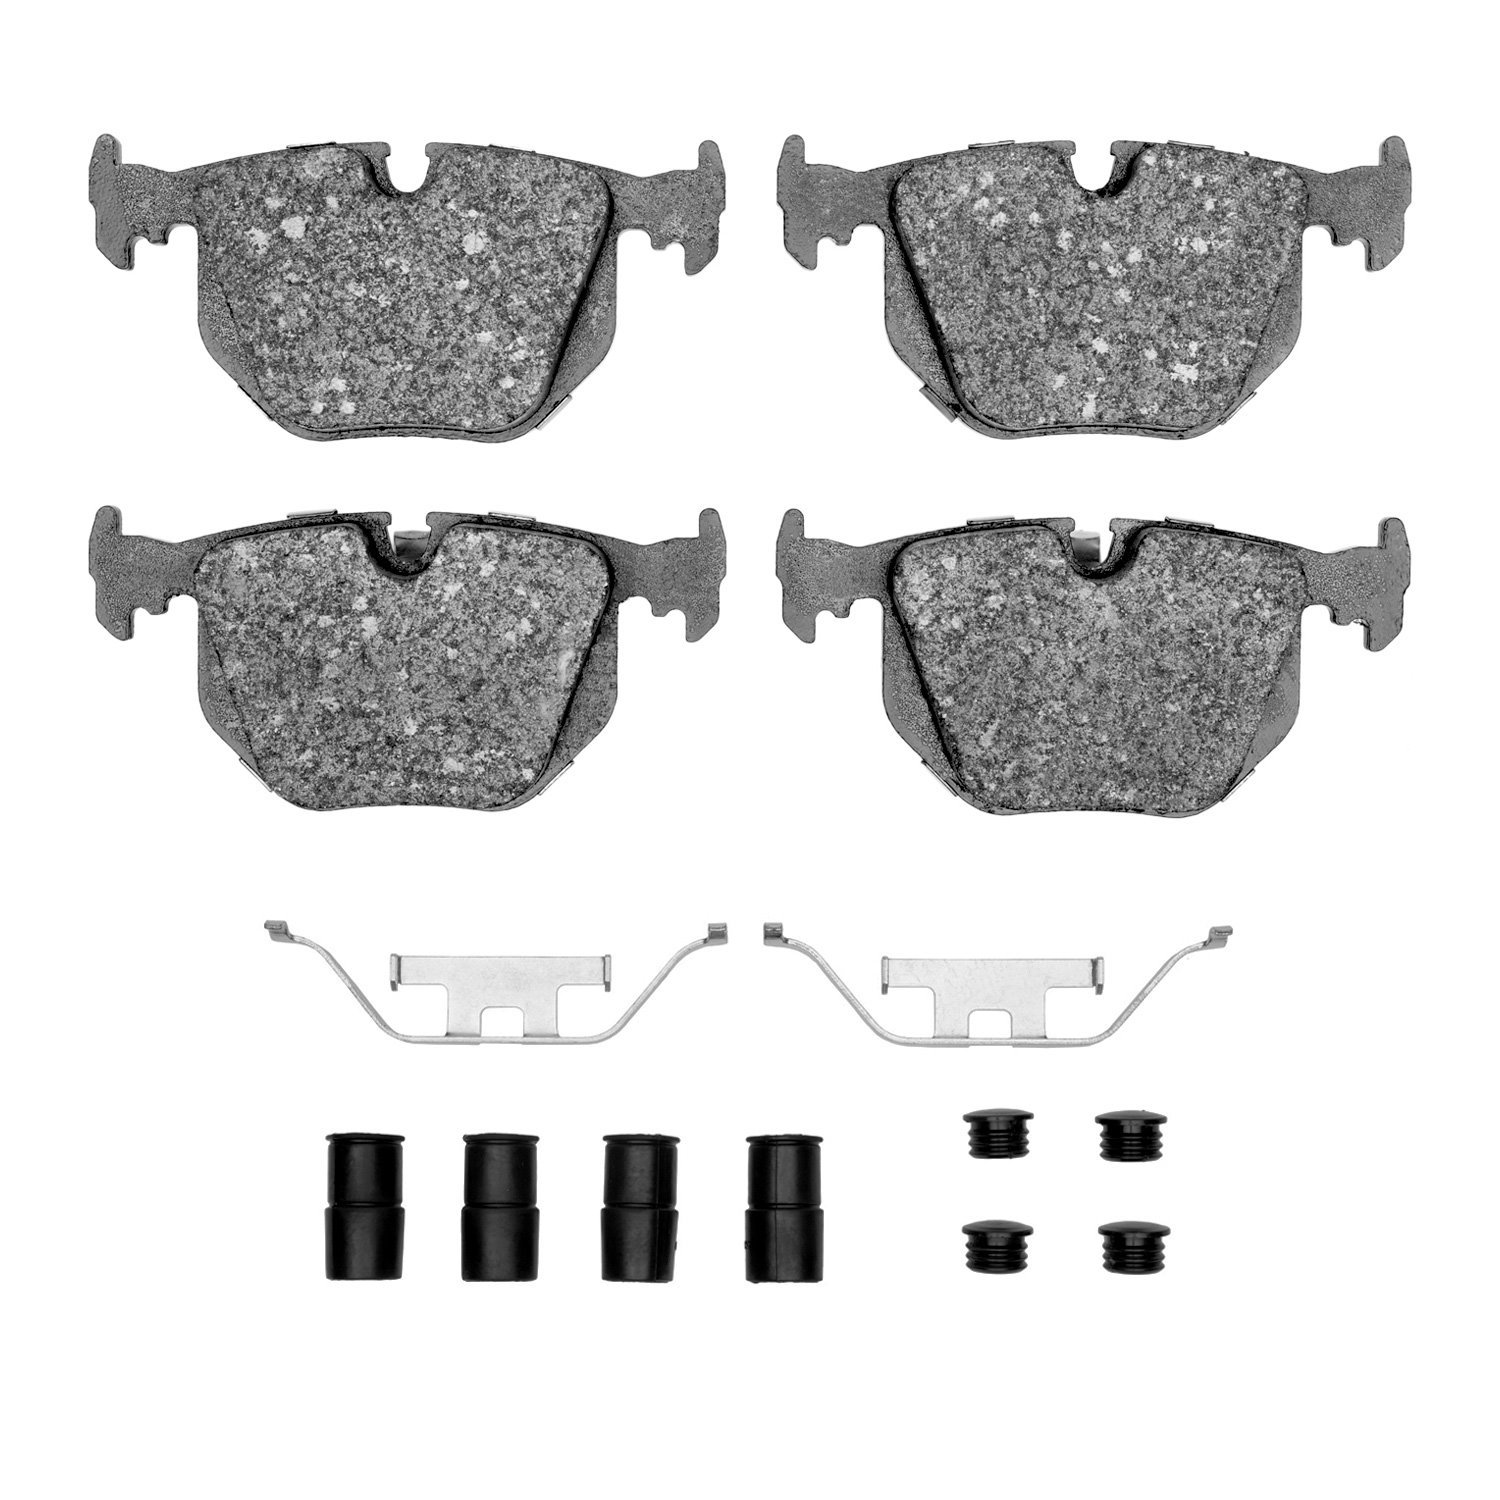 Ceramic Brake Pads & Hardware Kit, 1991-2010 Fits Multiple Makes/Models, Position: Rear